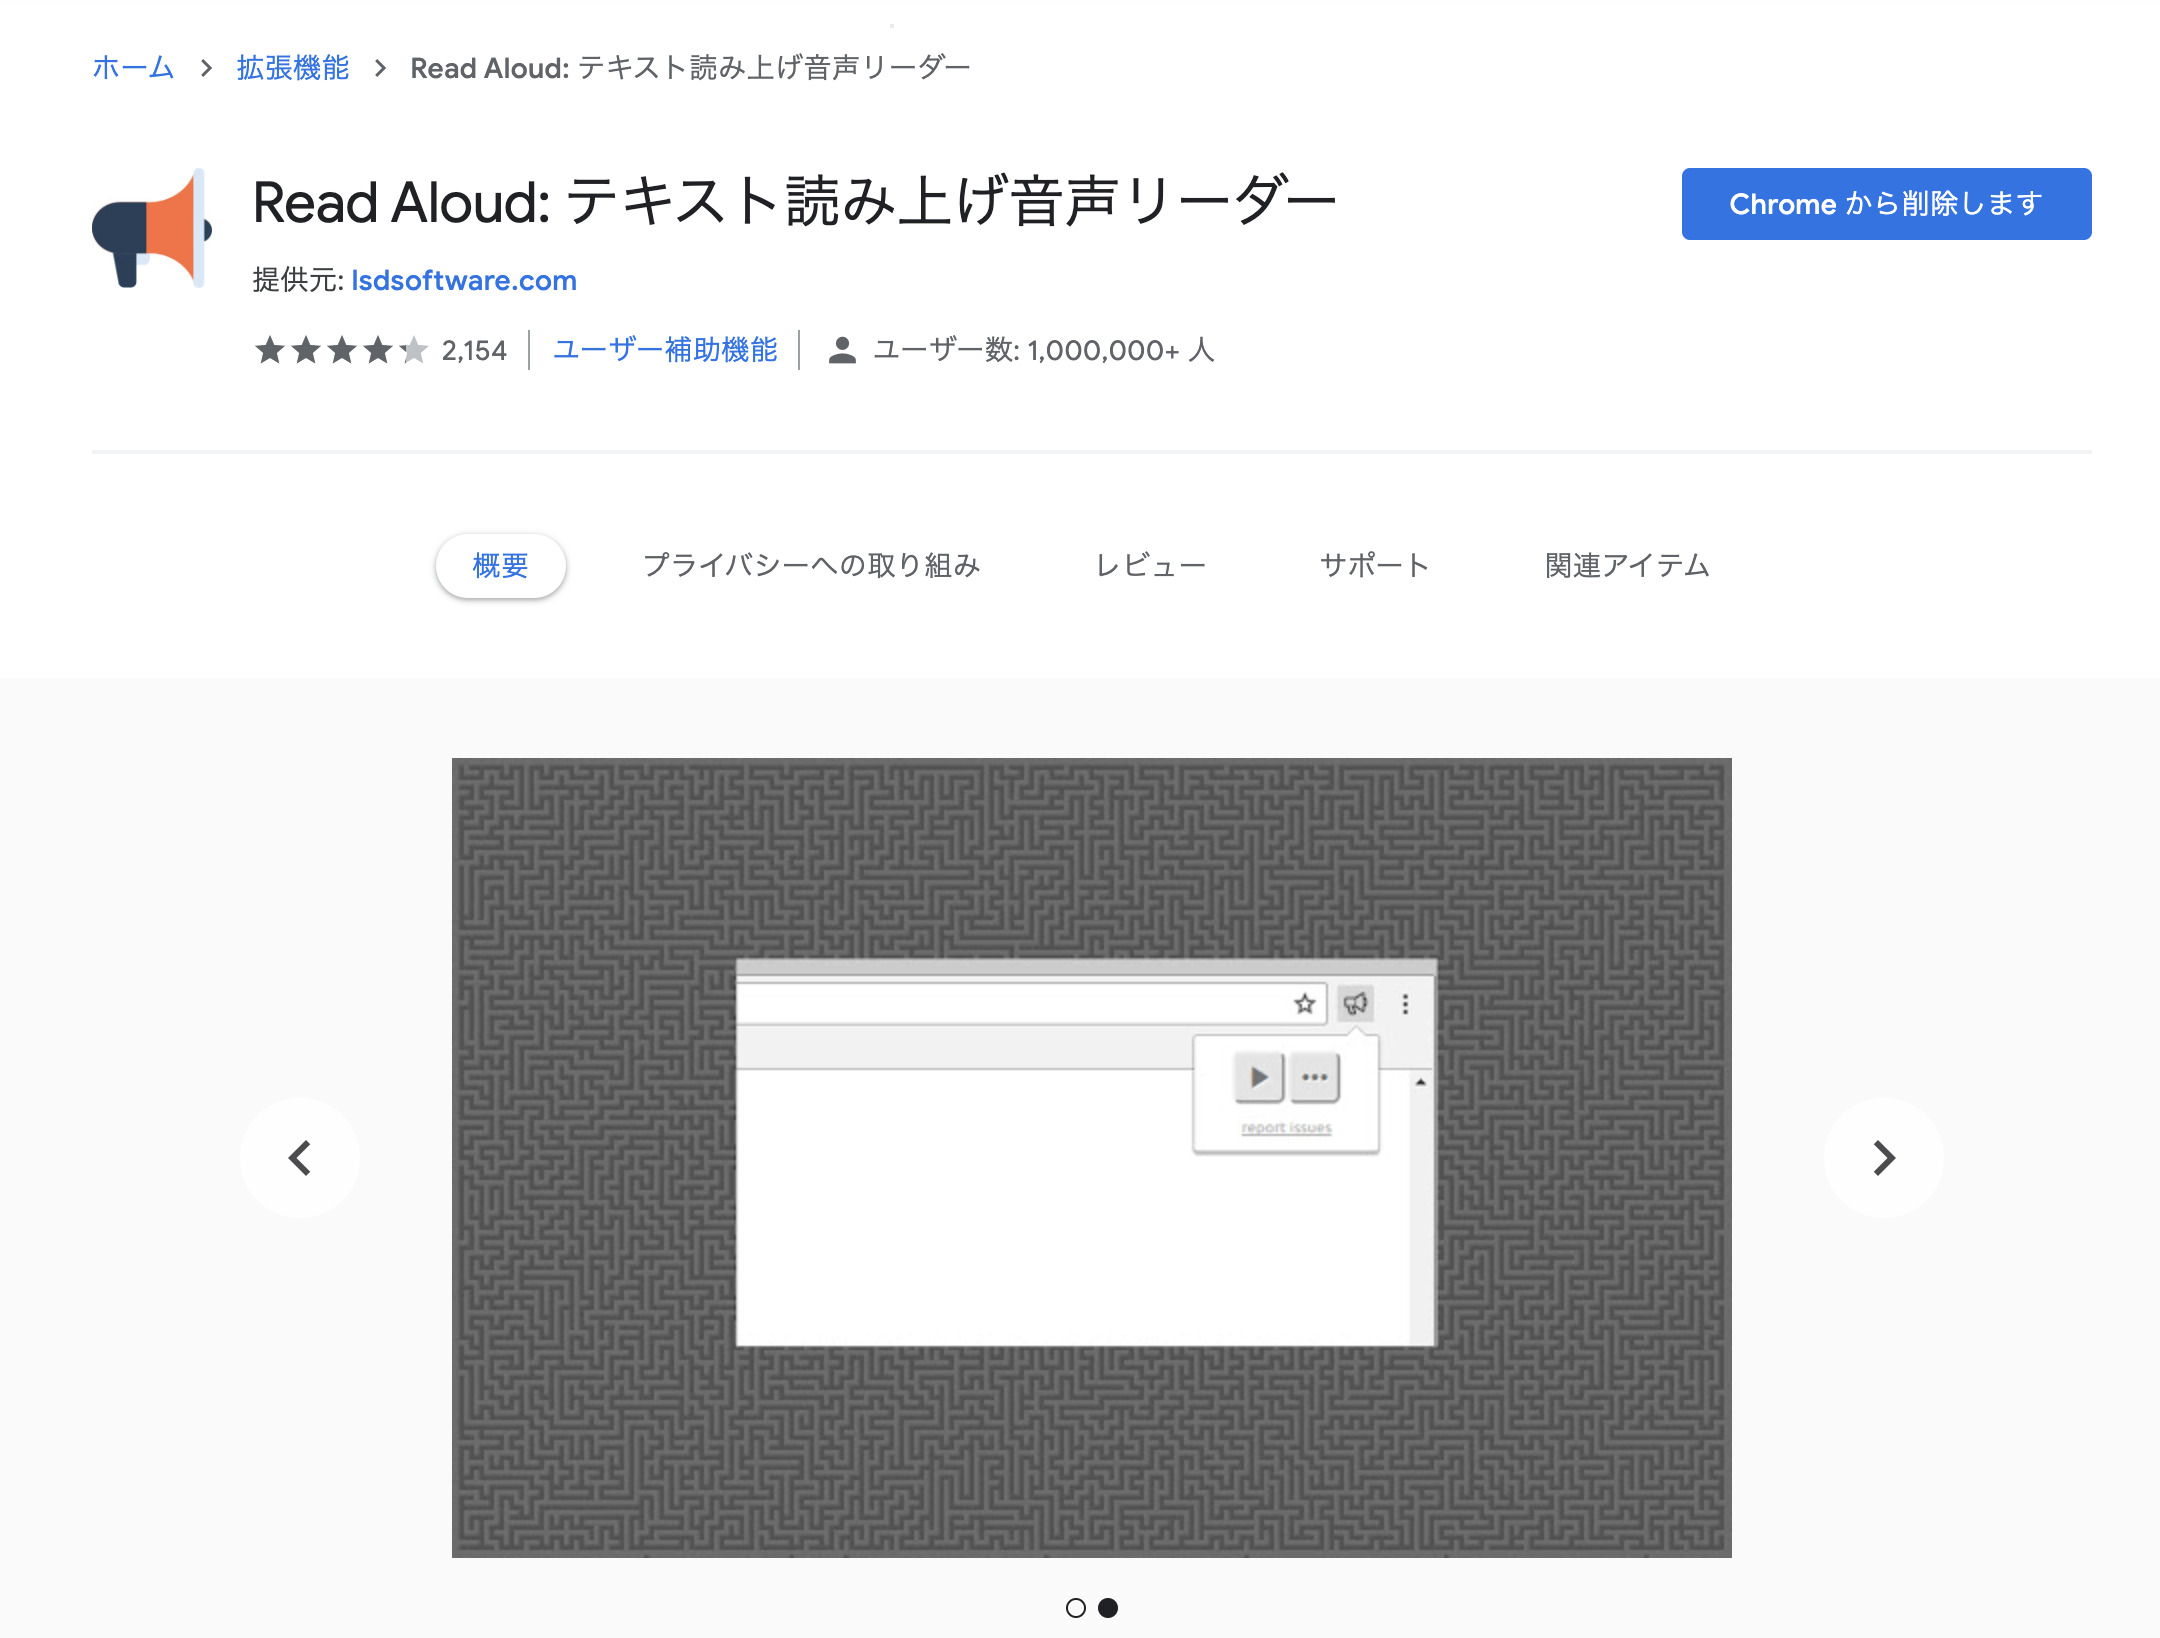 「Real Aloud」のGoogle拡張機能のインストール画面